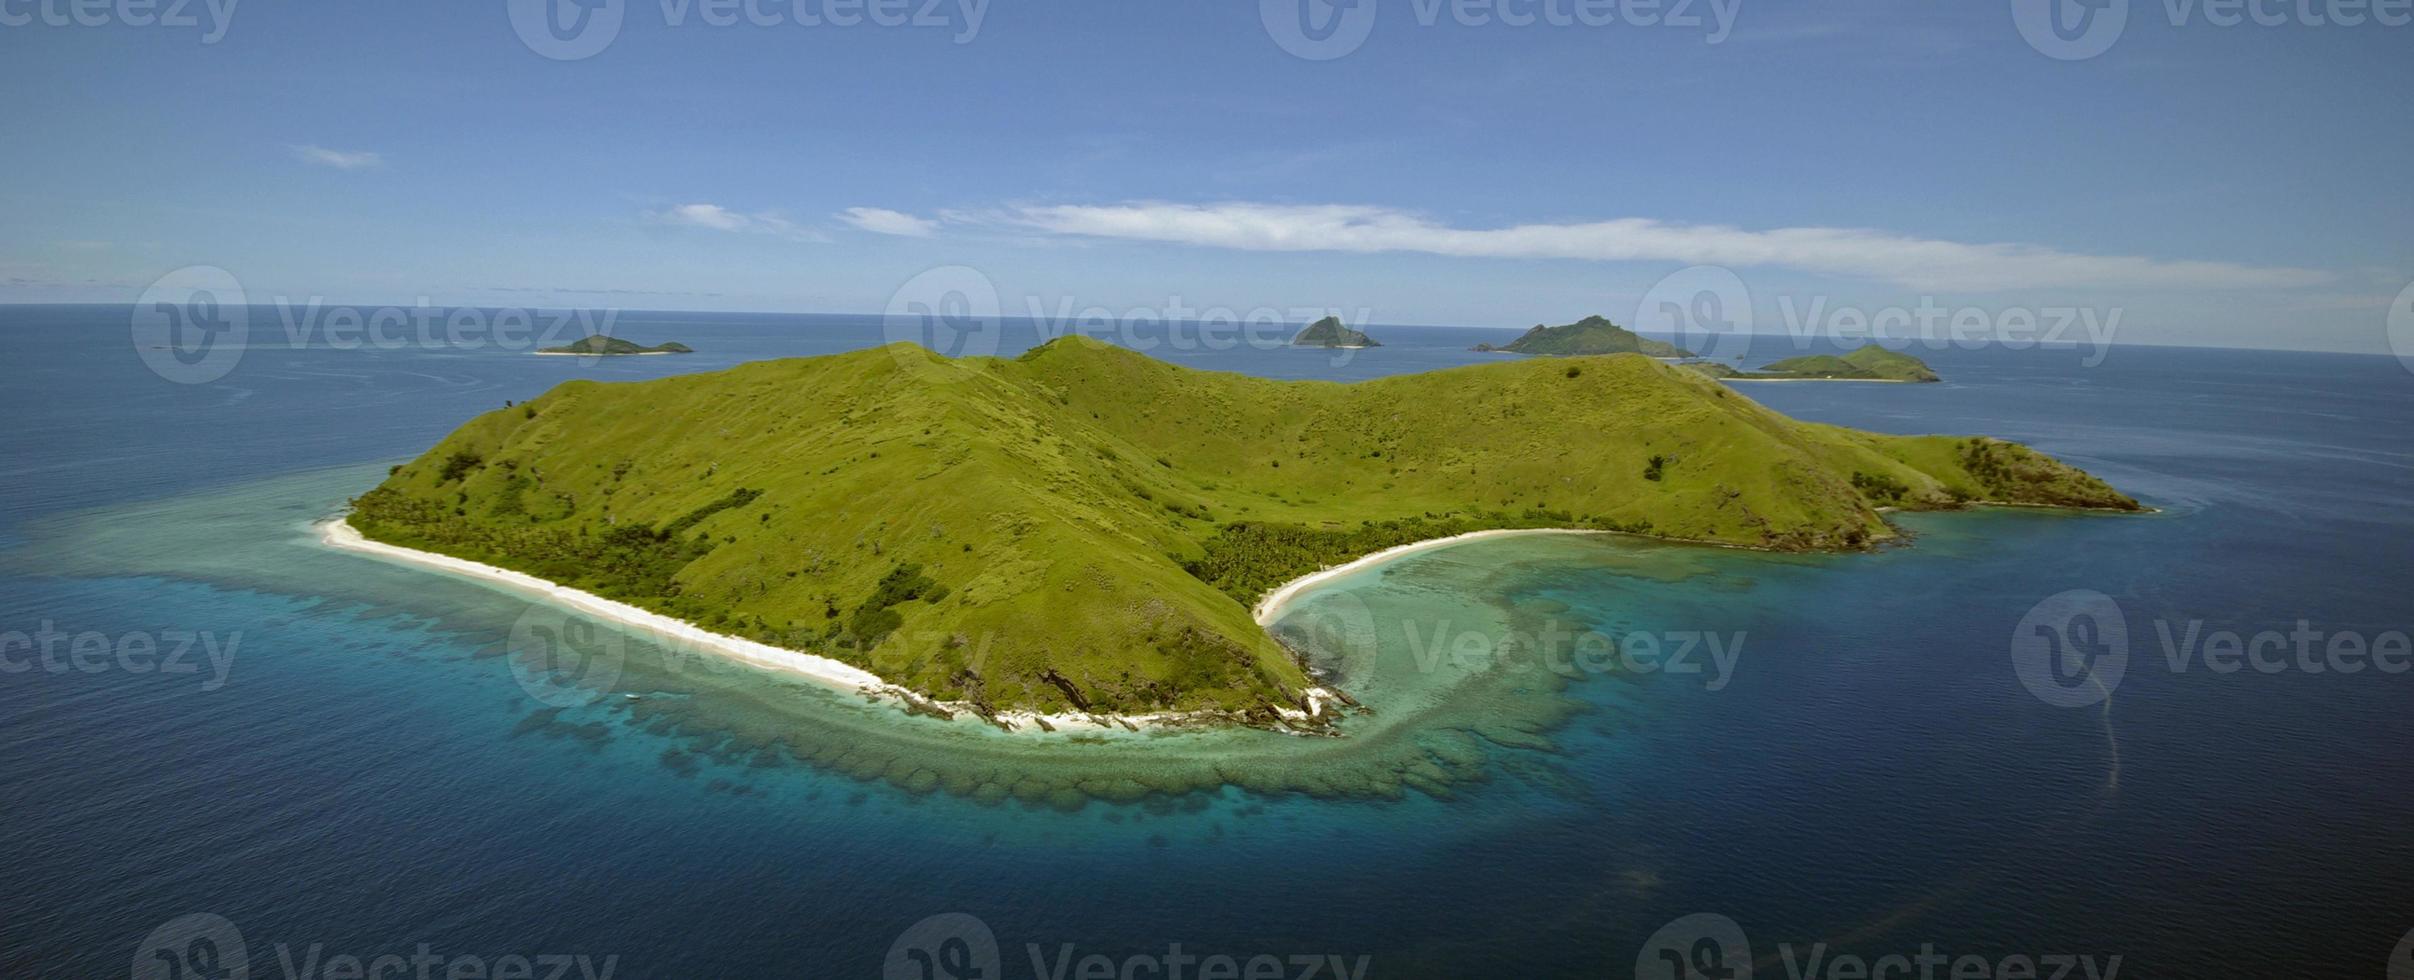 luchtfoto van tropisch eiland foto